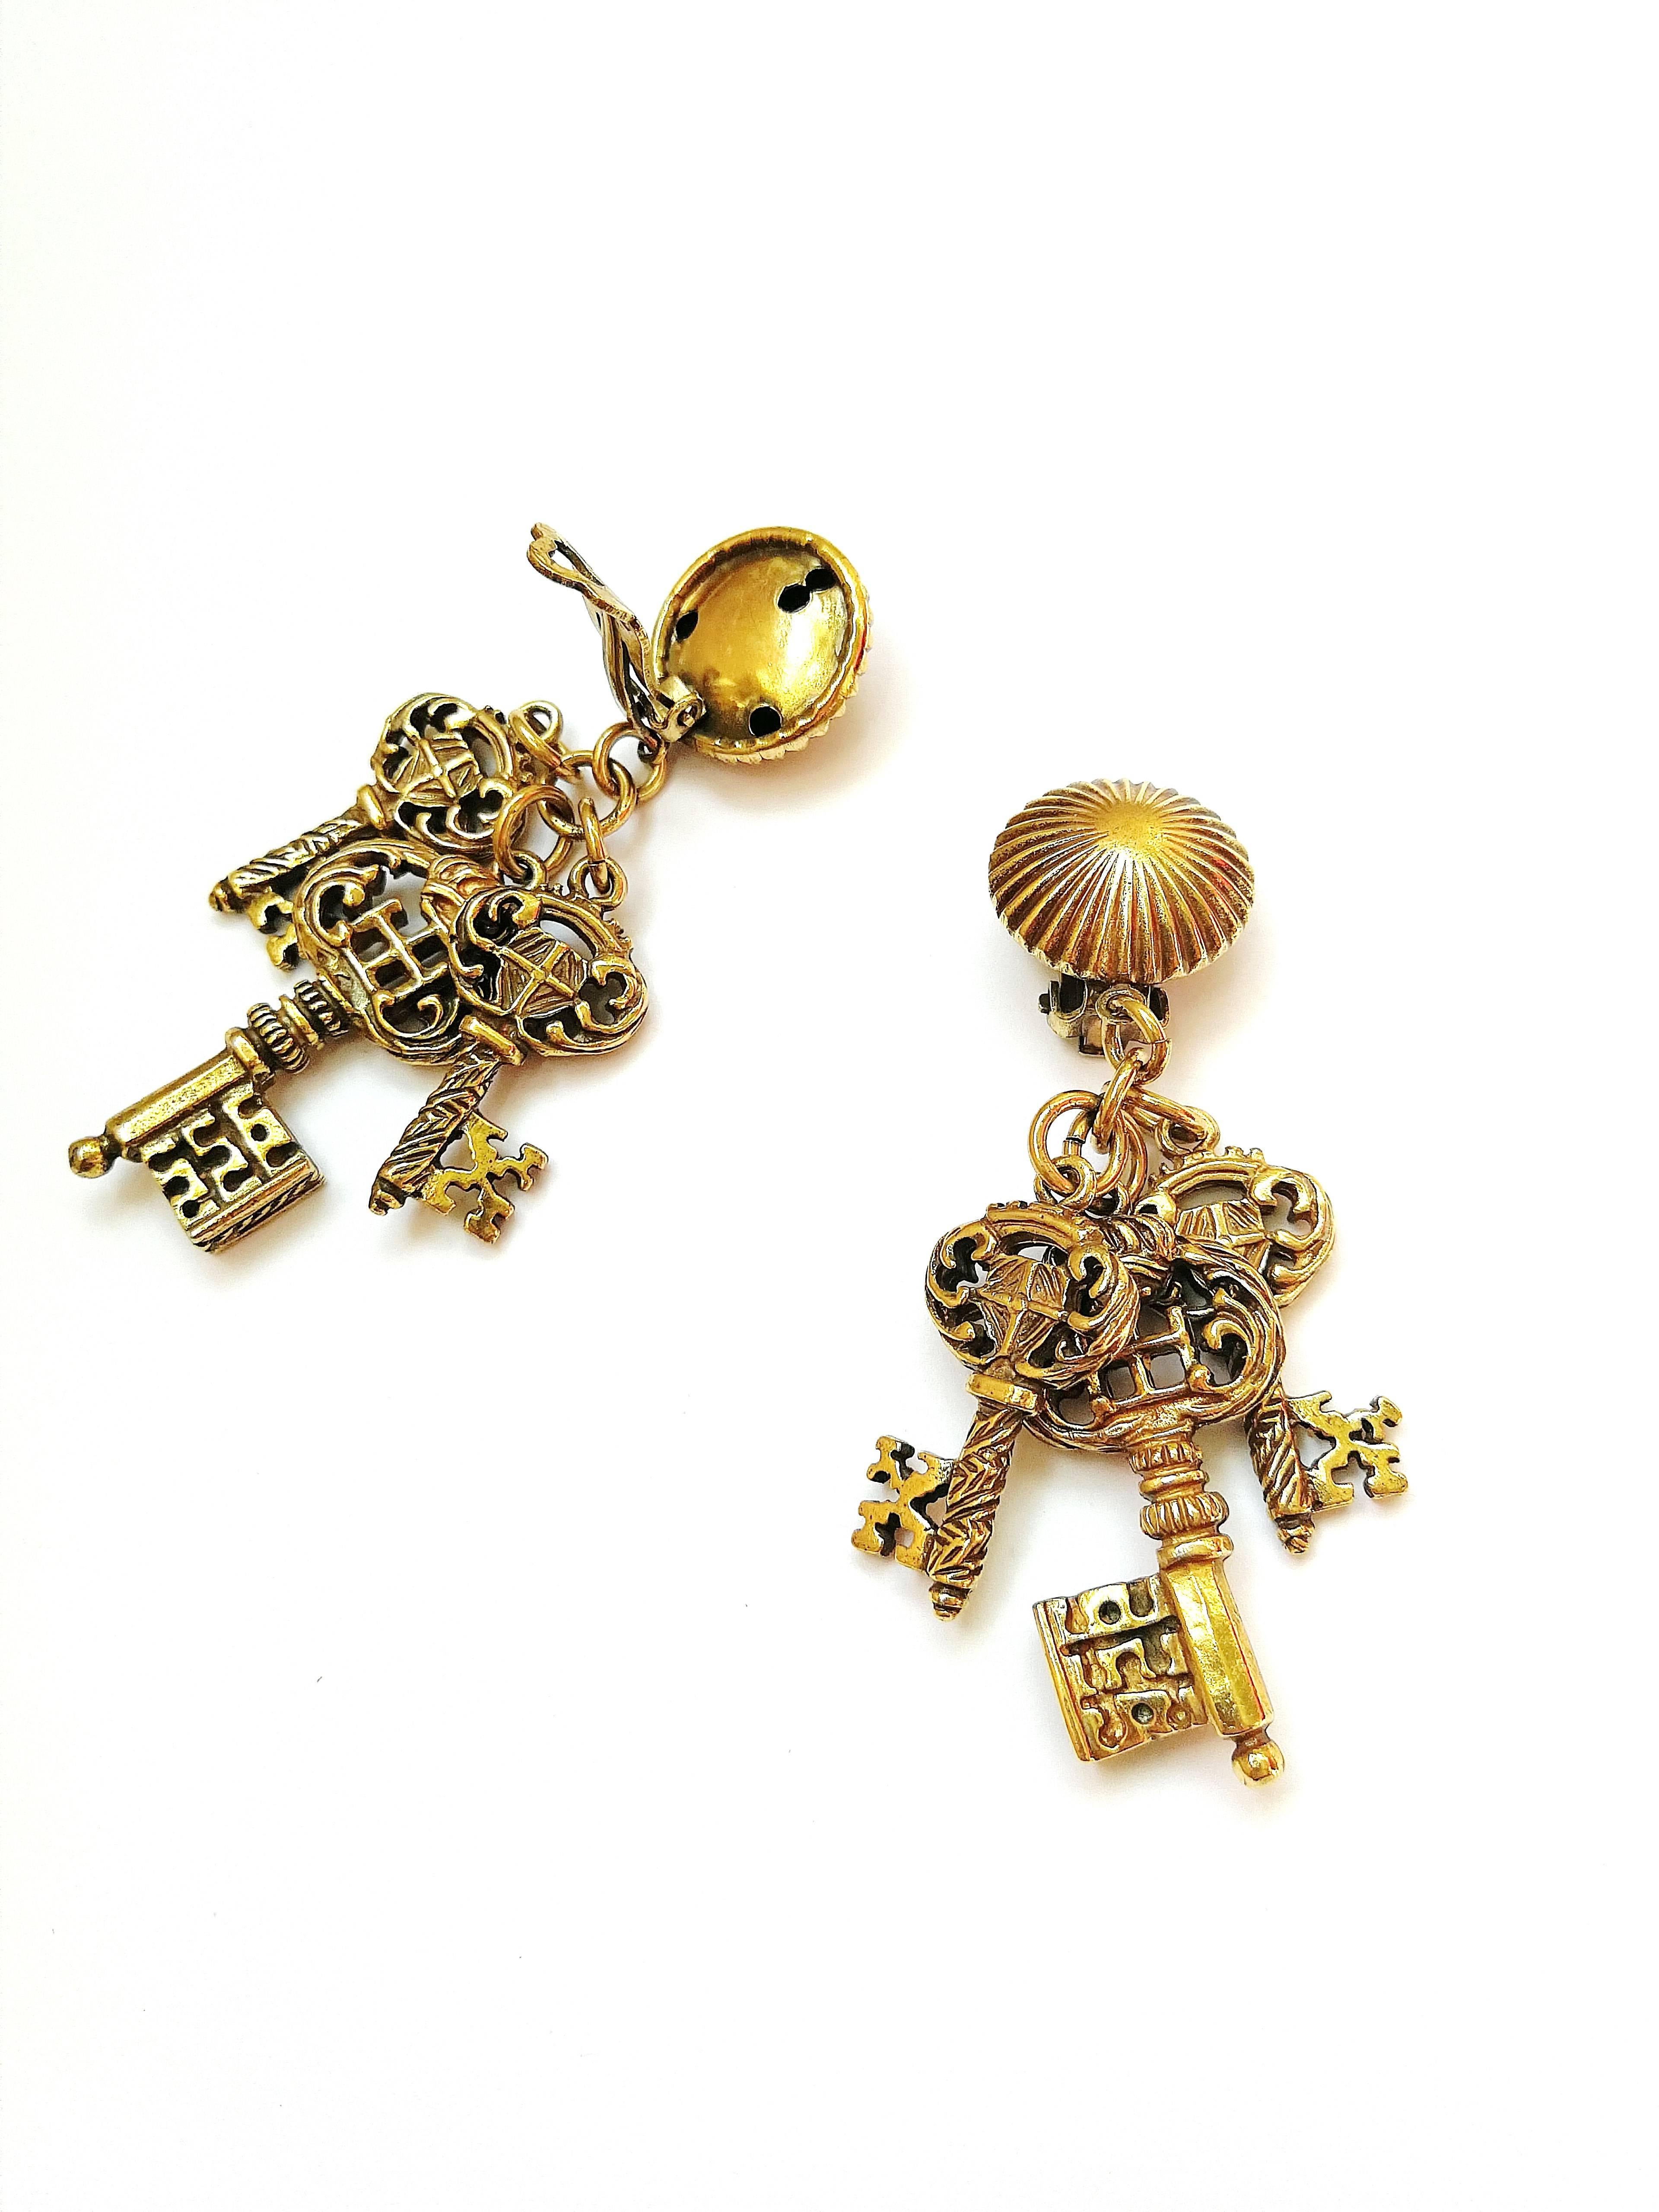 Antiqued gilt metal 'key' drop earrings, Selini, 1960s 1